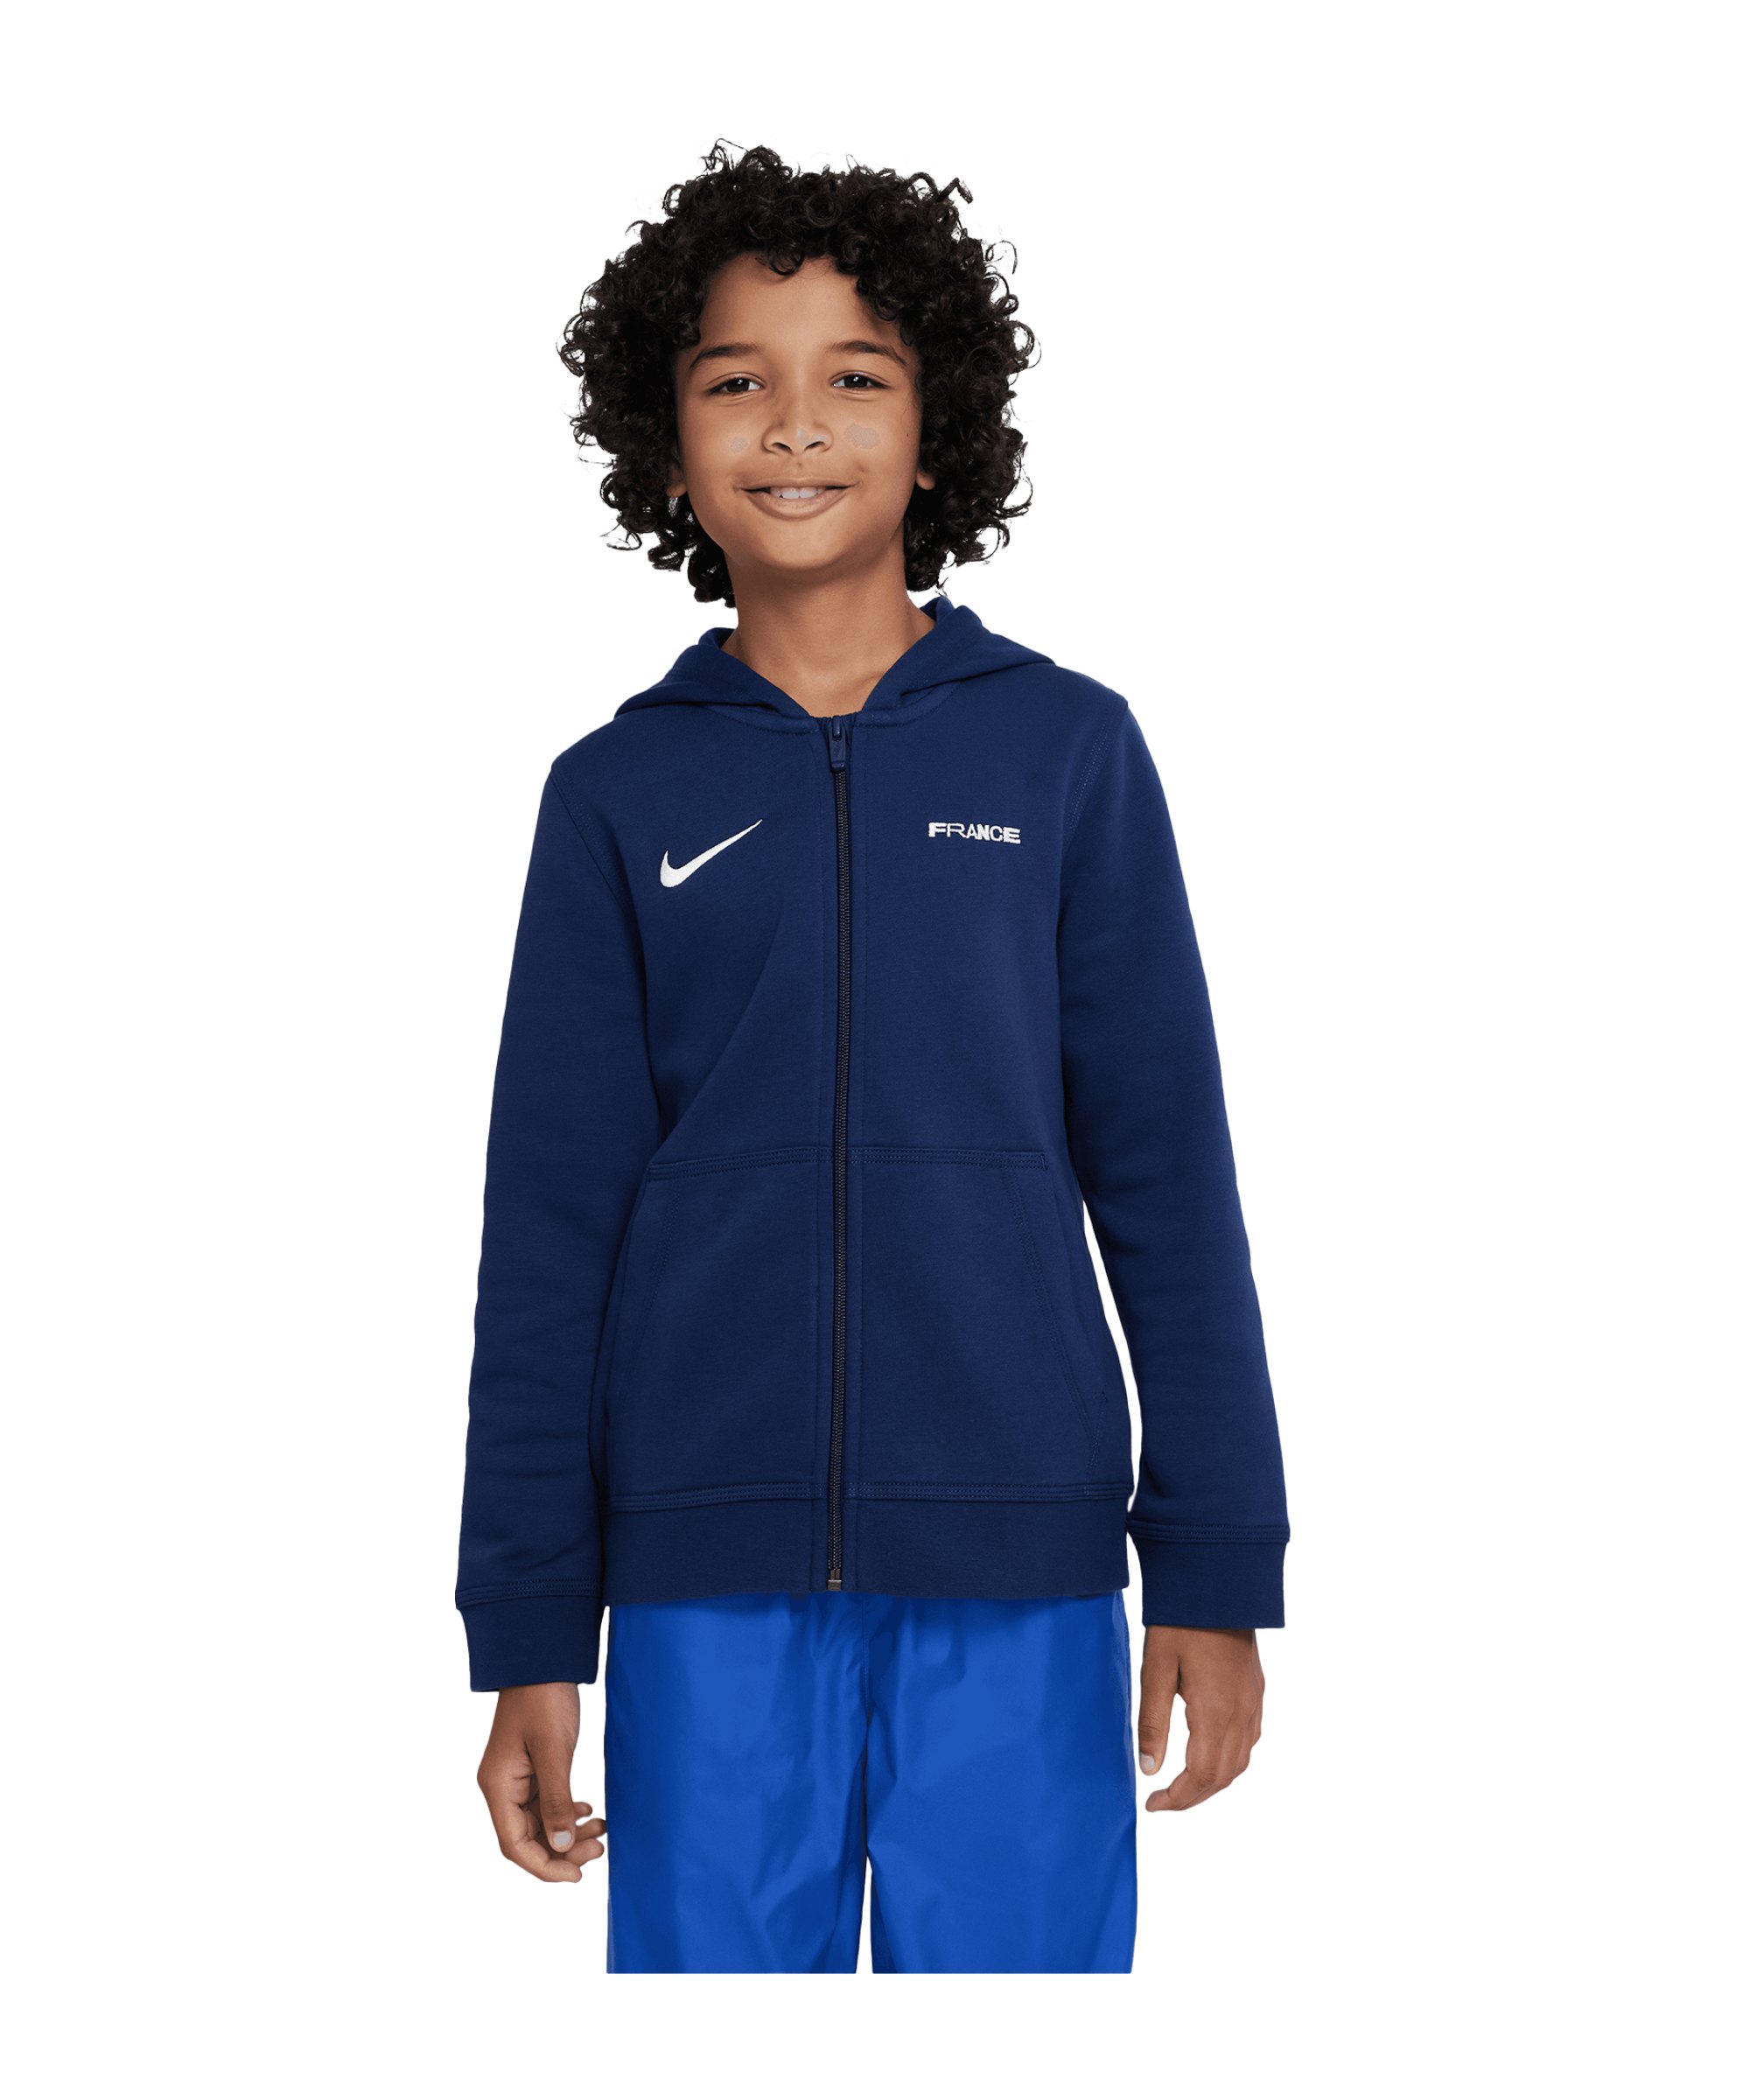 Nike Frankreich Kapuzenjacke Kids Blau F410 - blau